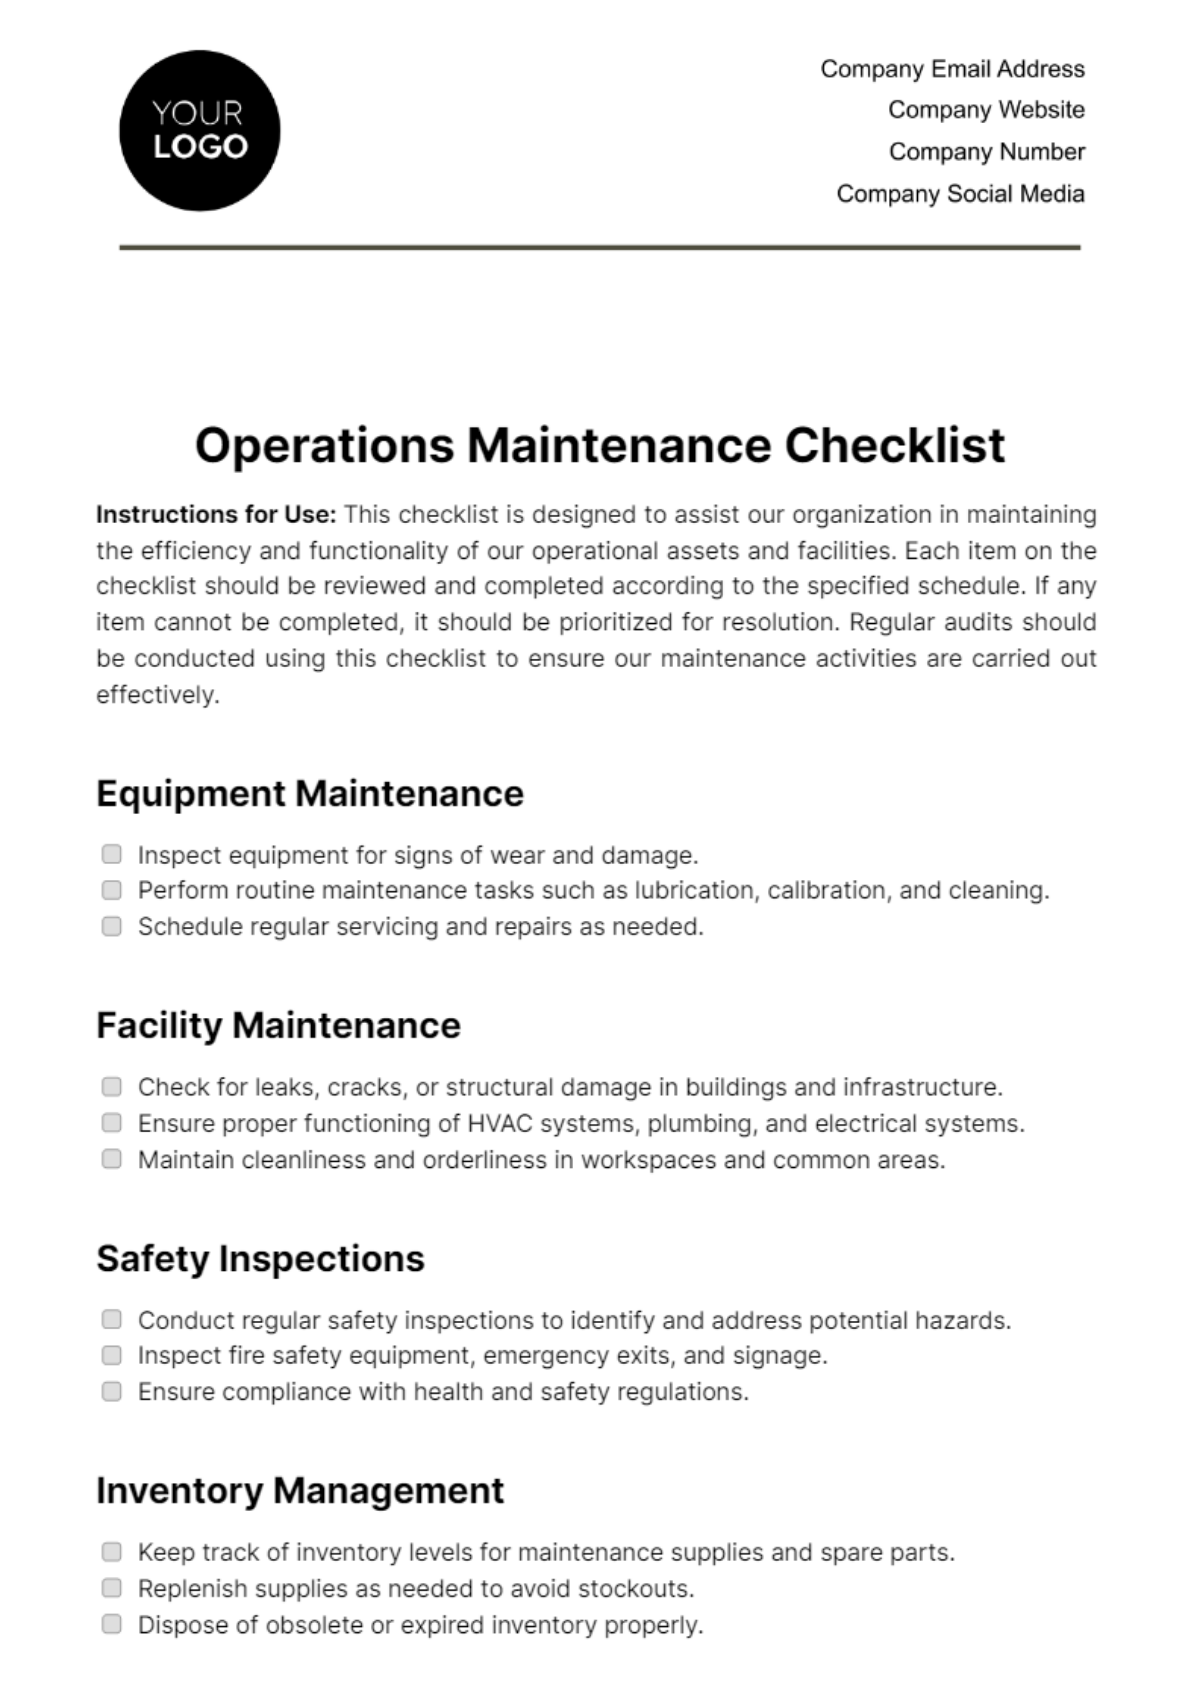 Operations Maintenance Checklist Template